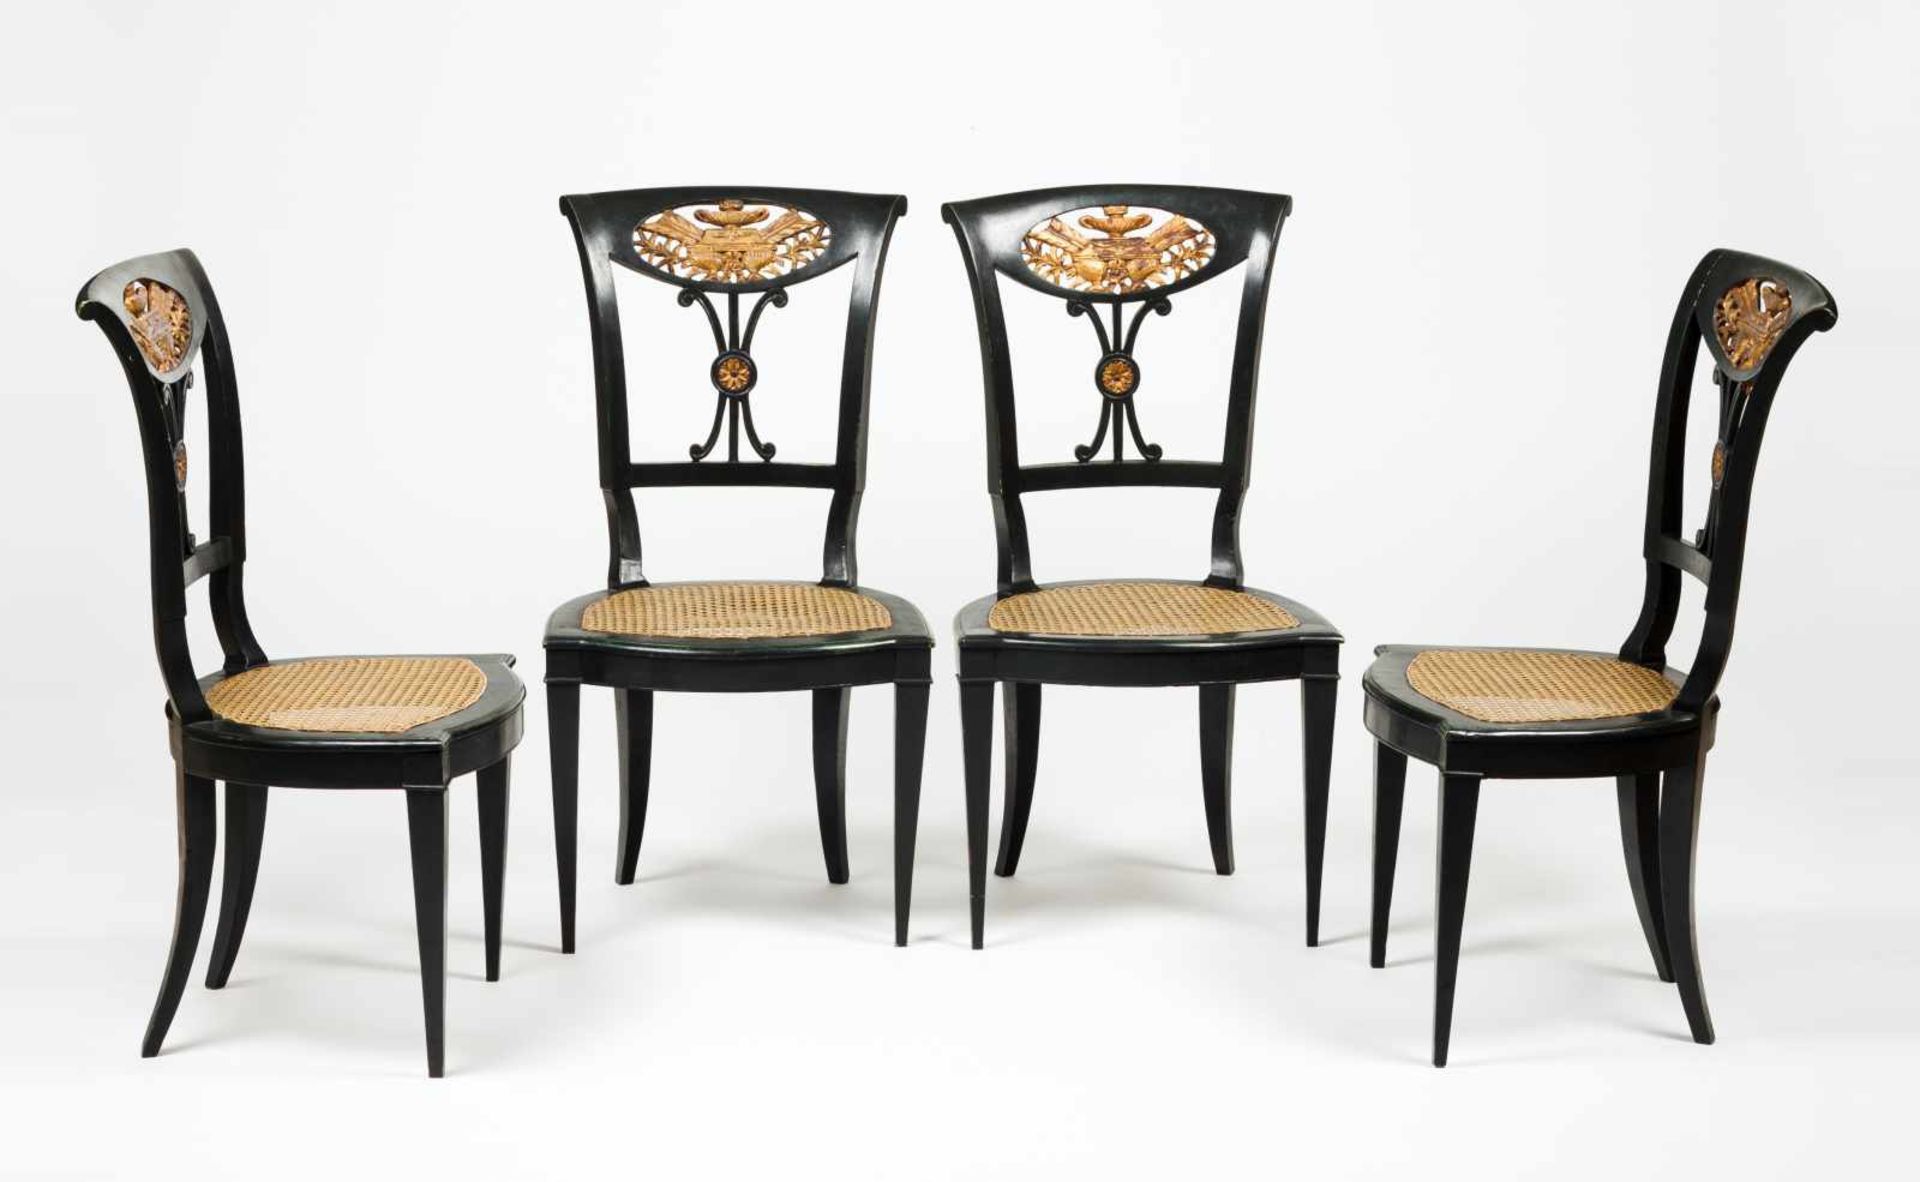 A chair set